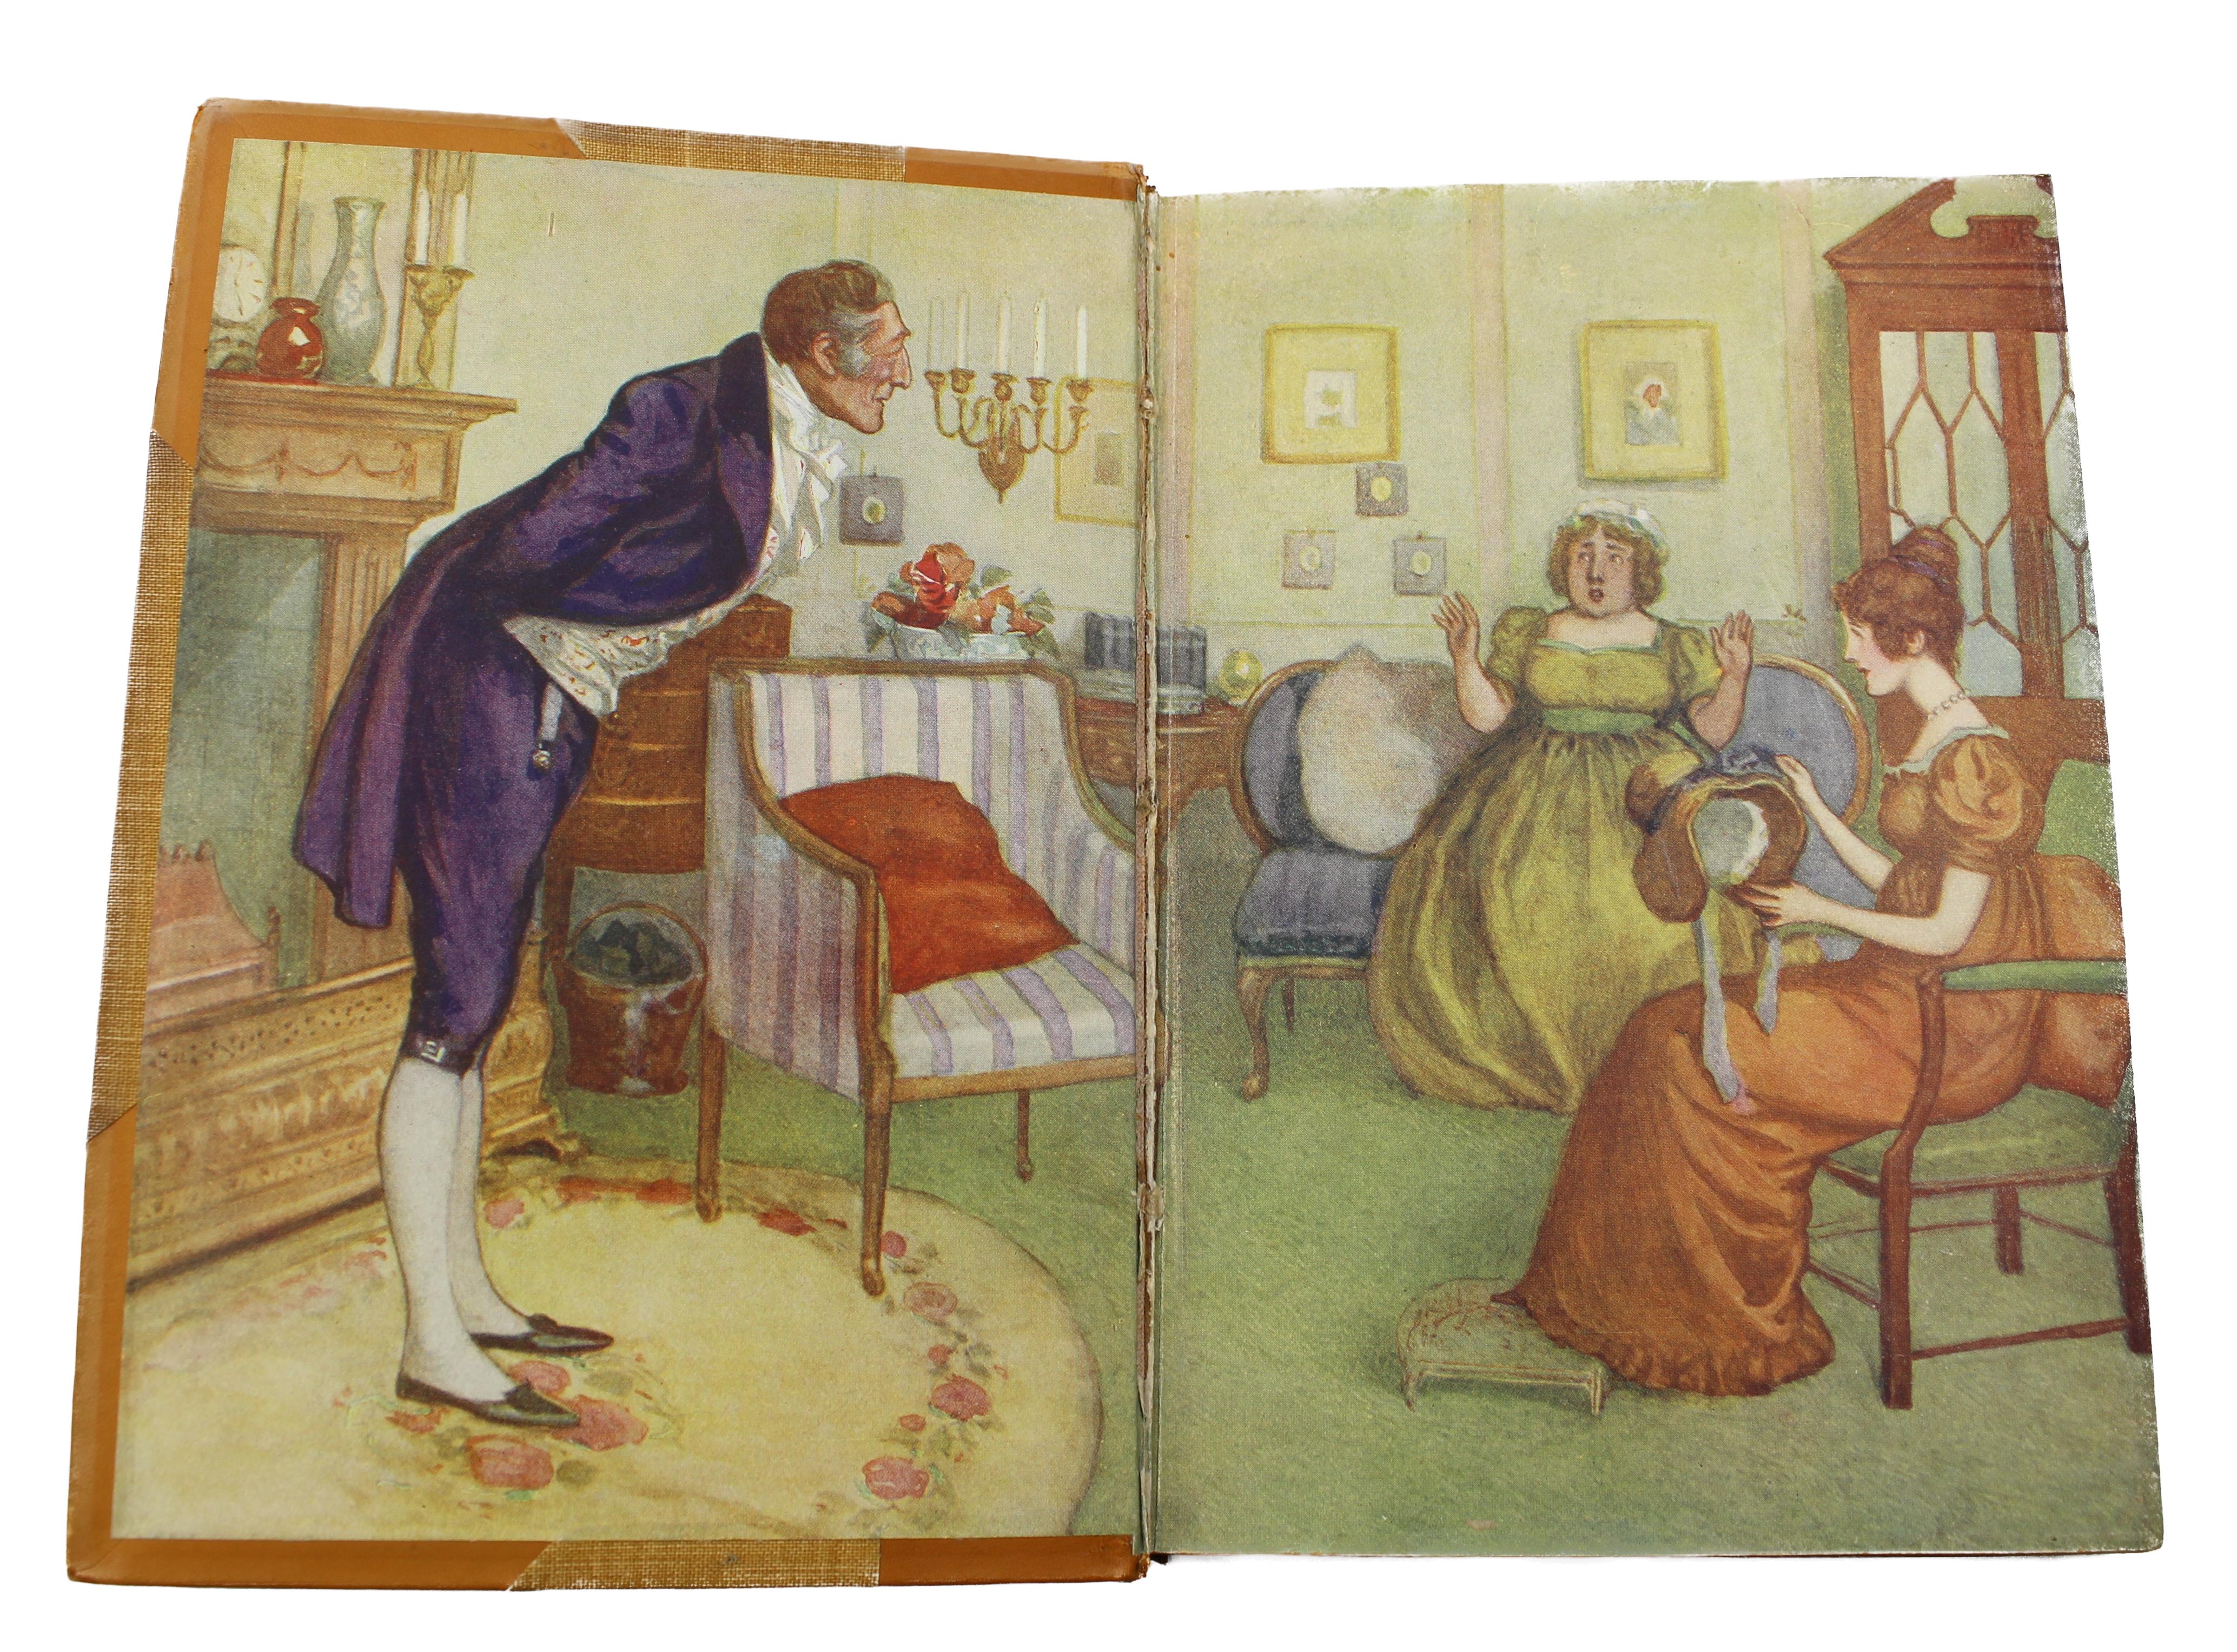 English The Novels of Jane Austen by Jane Austen, 10 Volume Set, 1908-1909